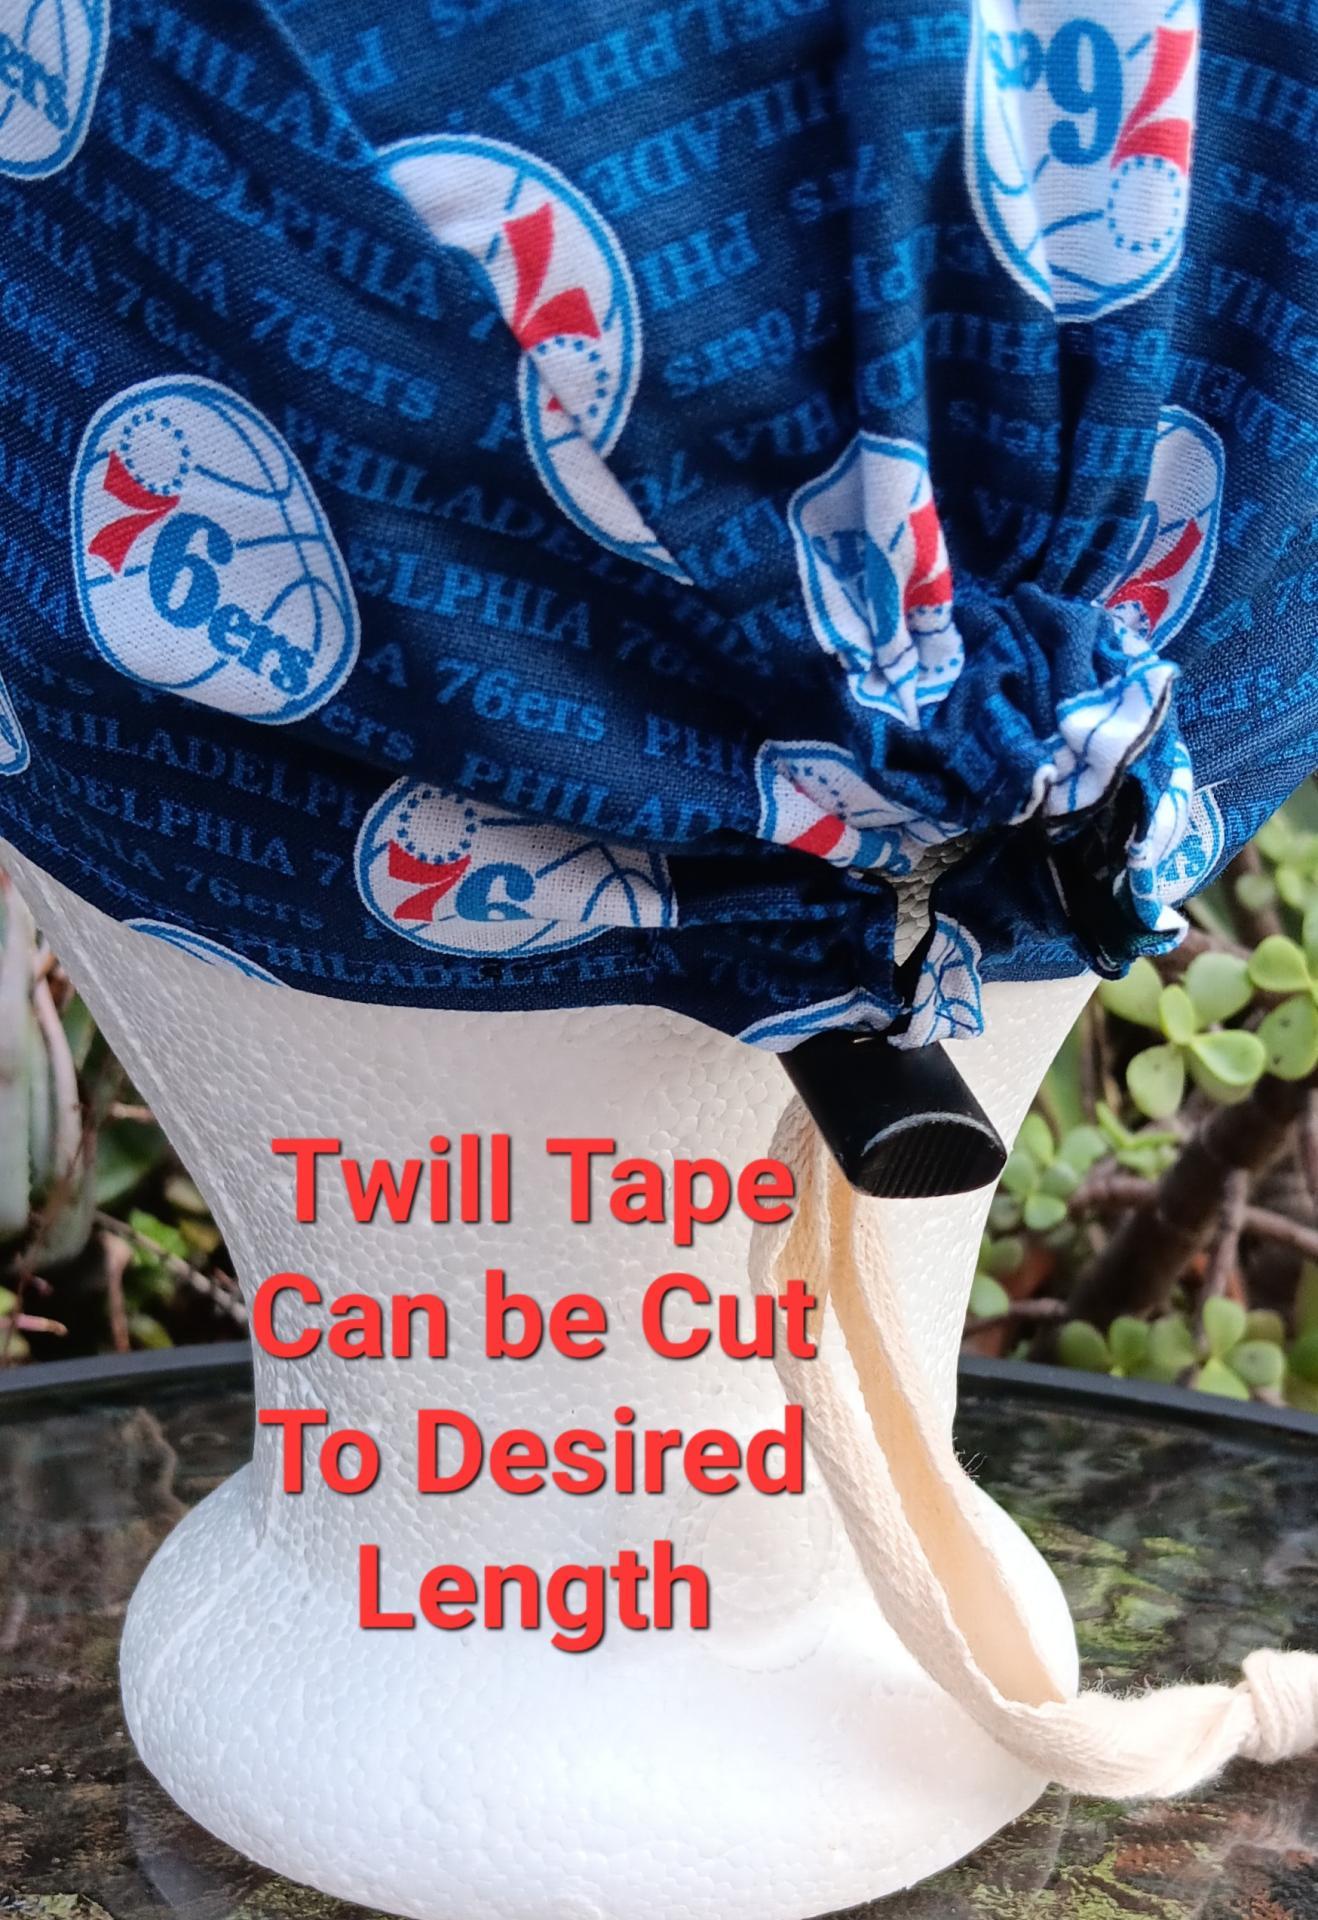 Toggle Cord Lock Reversible Philadelphia Phillies / 76ers scrub cap, adjustable, for nurse, dentist, technician, food service, handmade